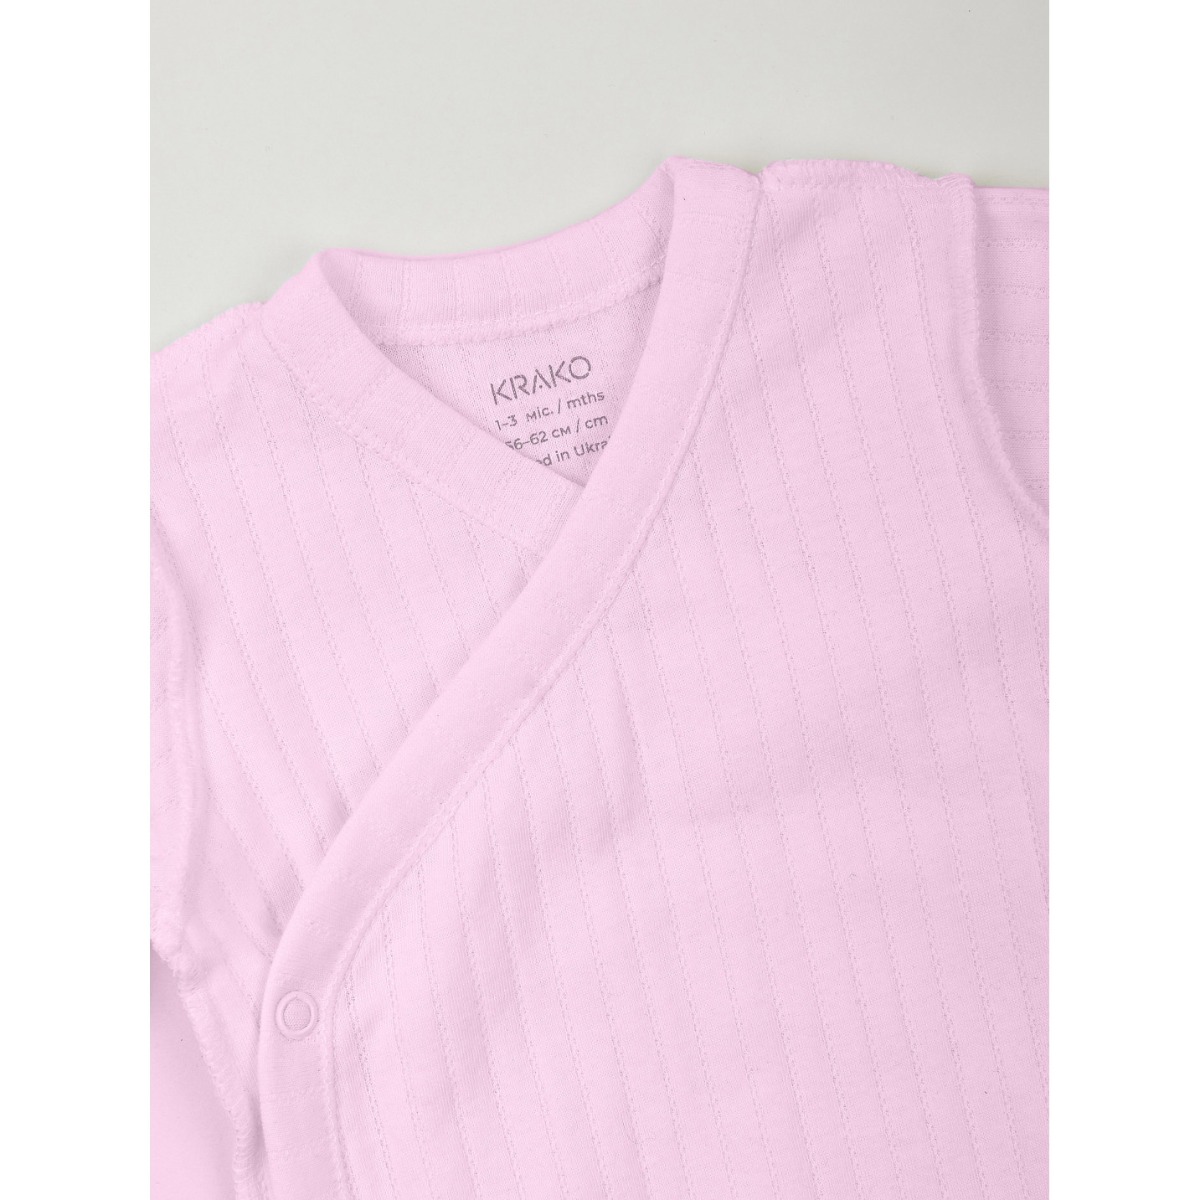 Боди-льоля из ажурного трикотажа для девочки (розовый), 4032B22